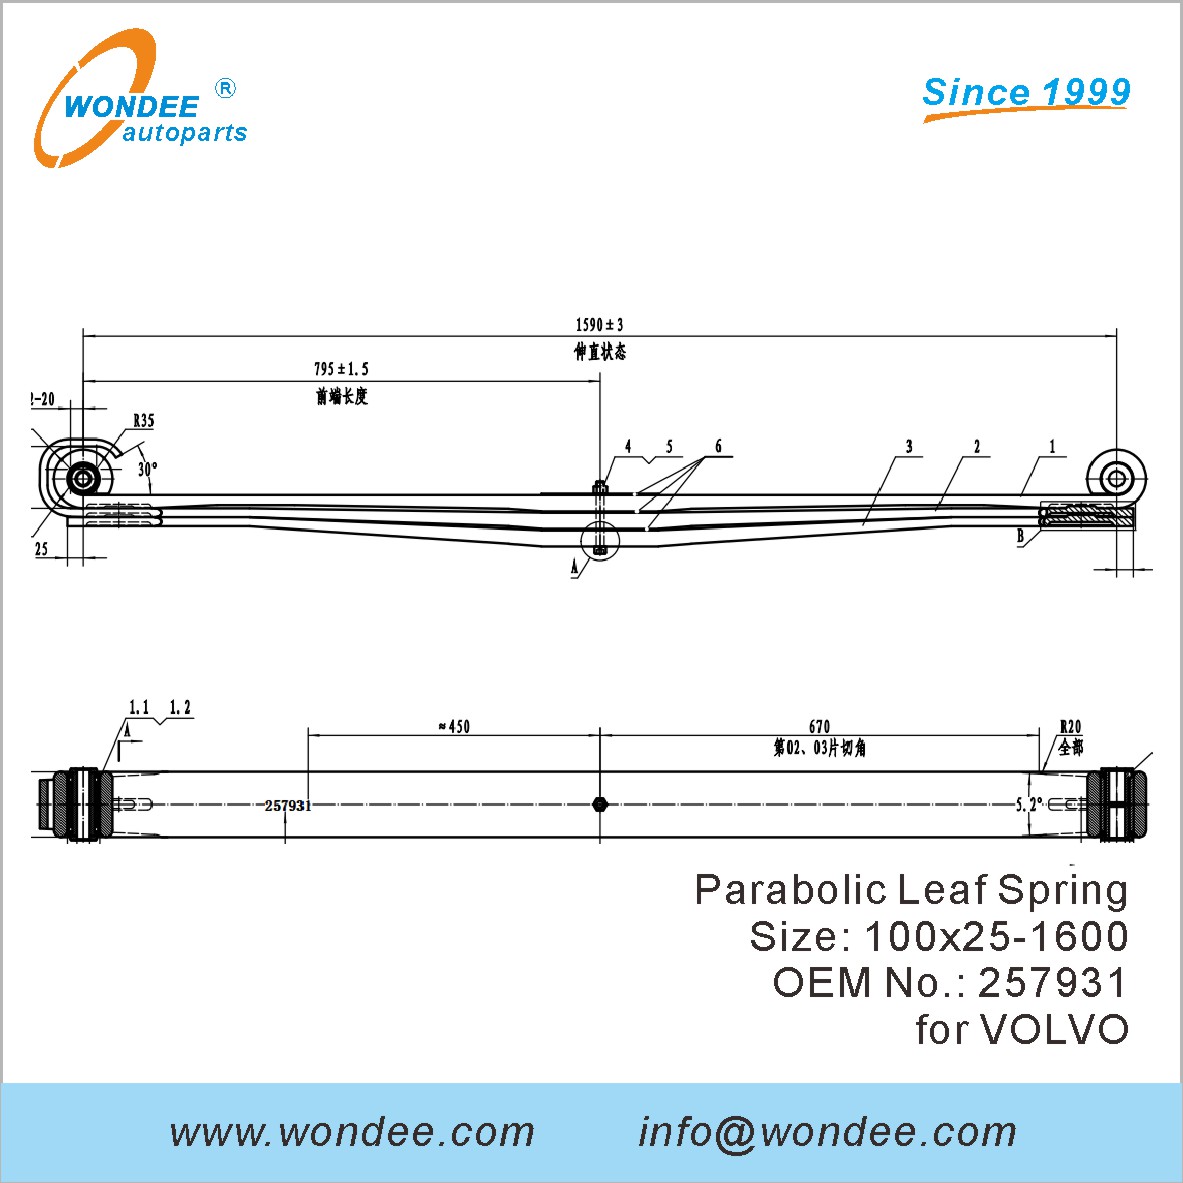 WONDEE heavy duty parabolic Leaf Spring OEM 257931 for VOLVO